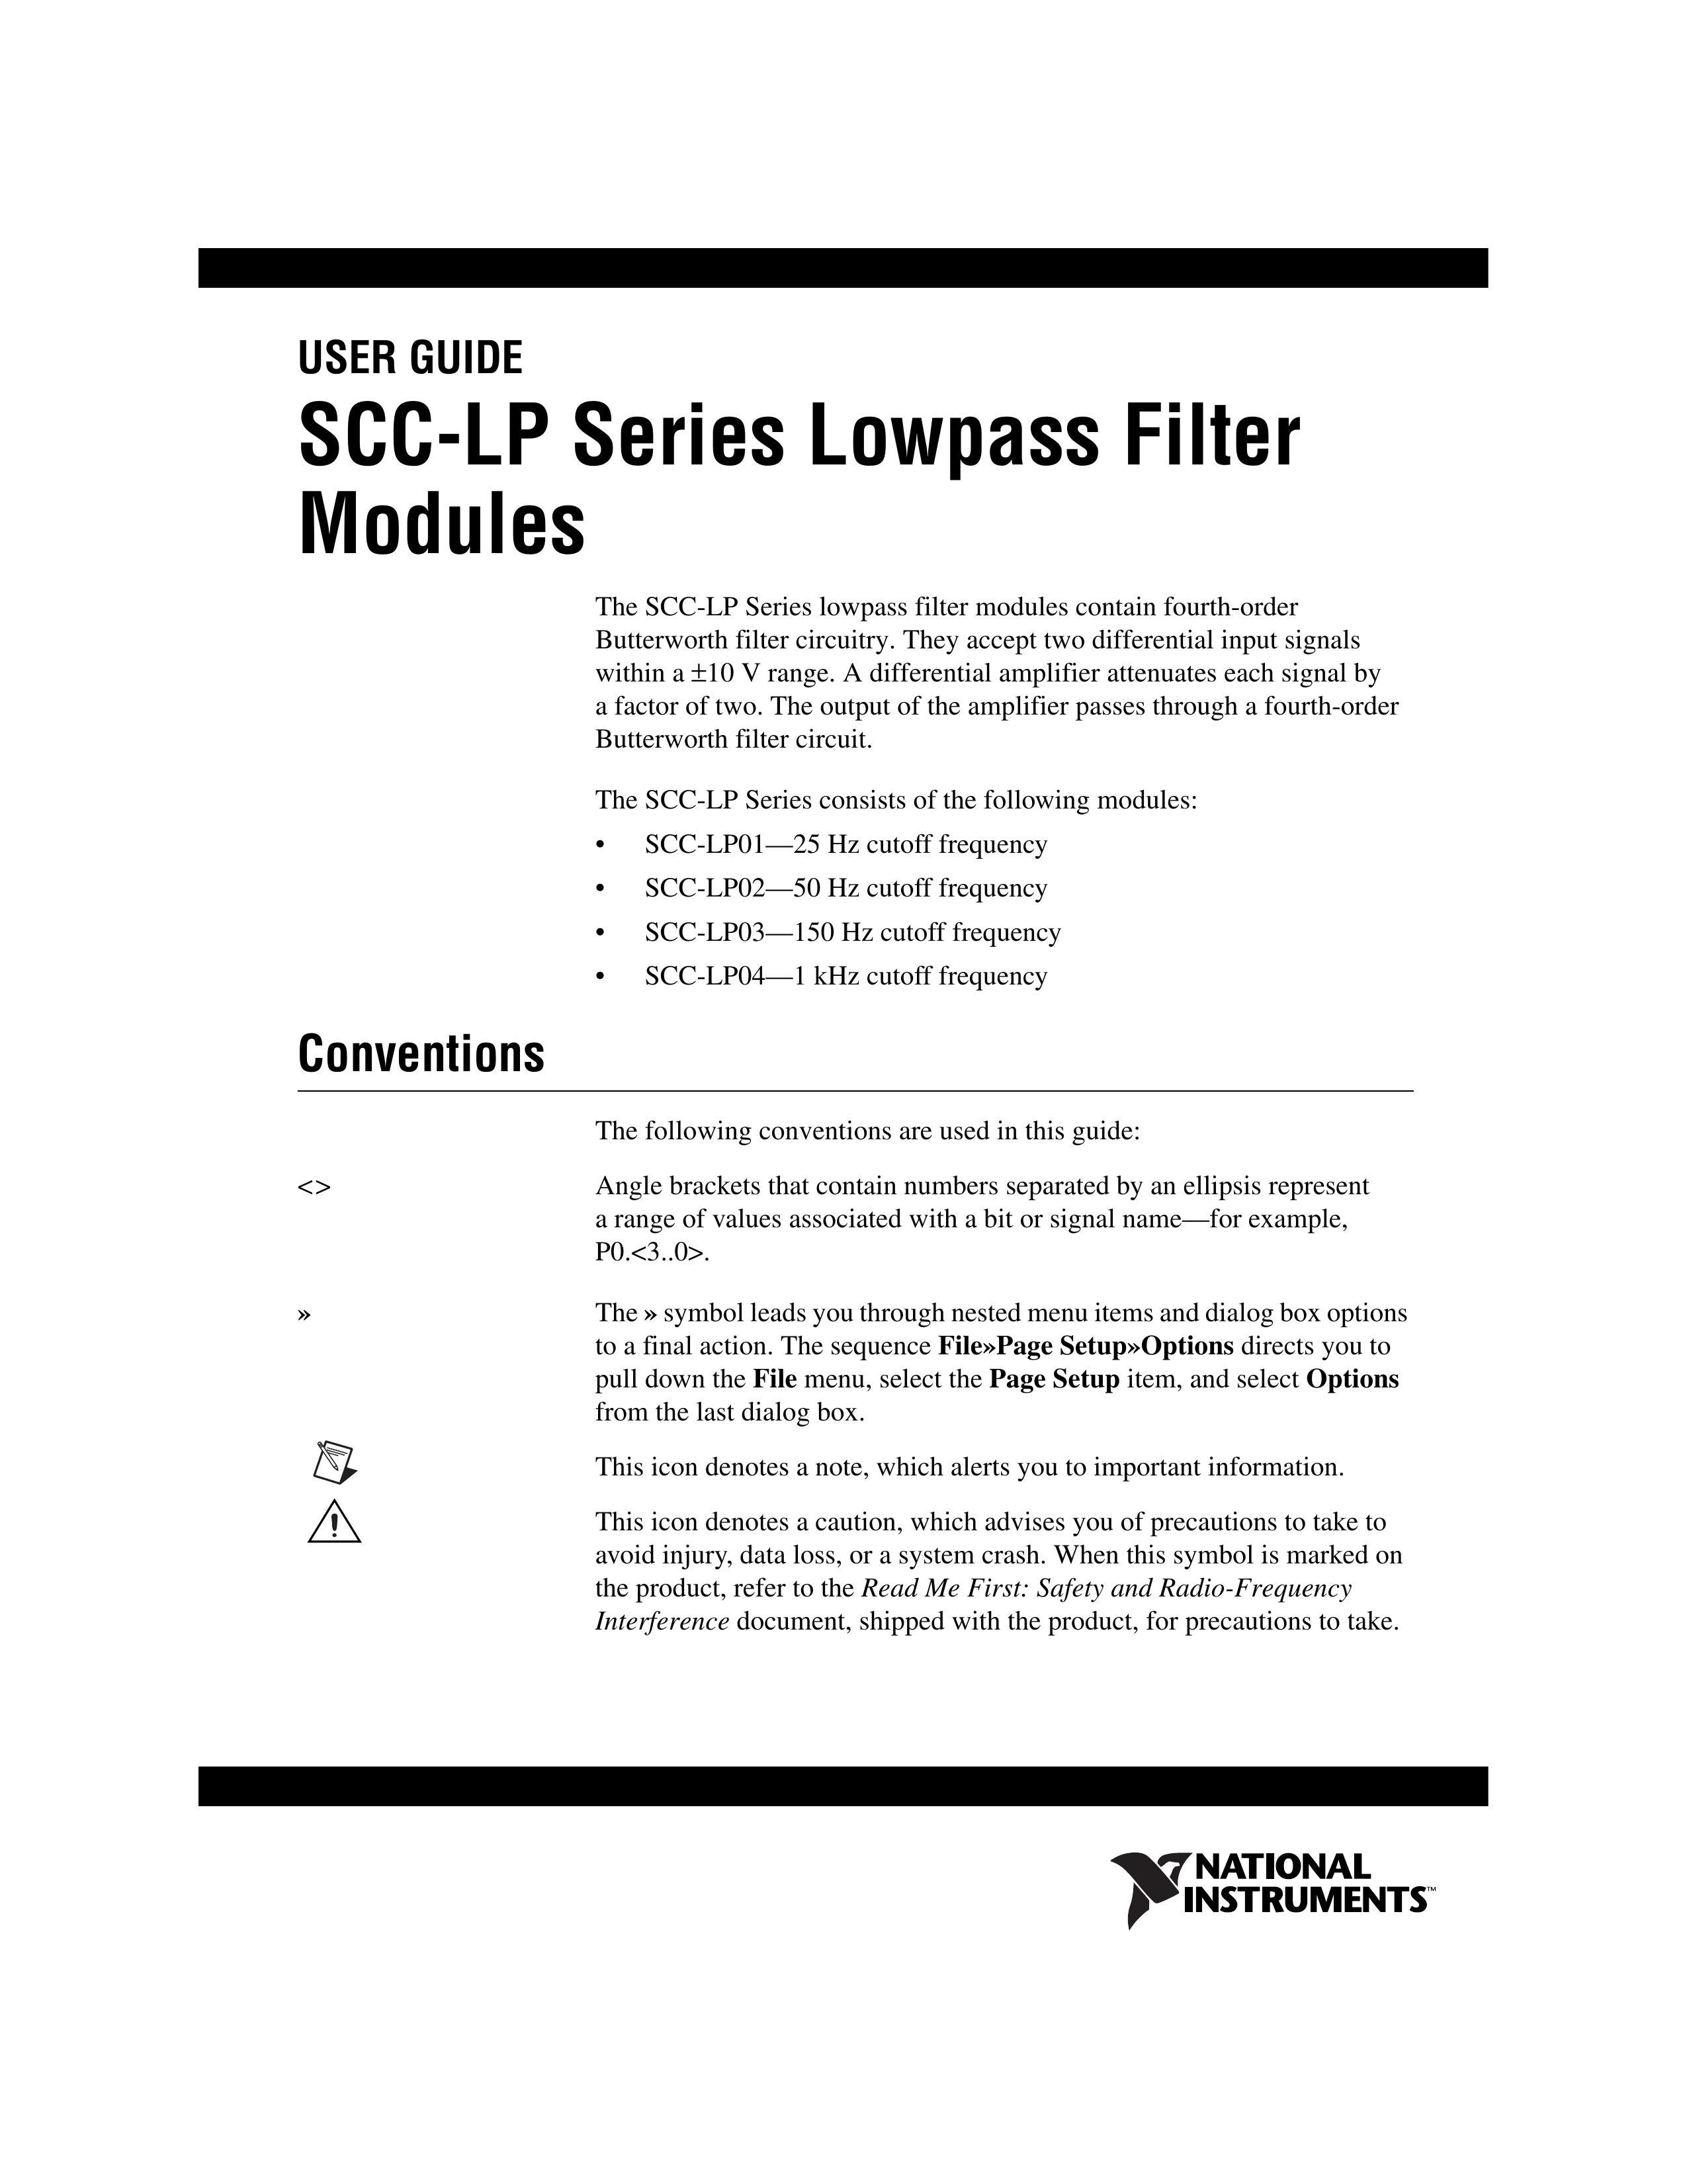 National Instruments SCC-LP02 Dryer Accessories User Manual